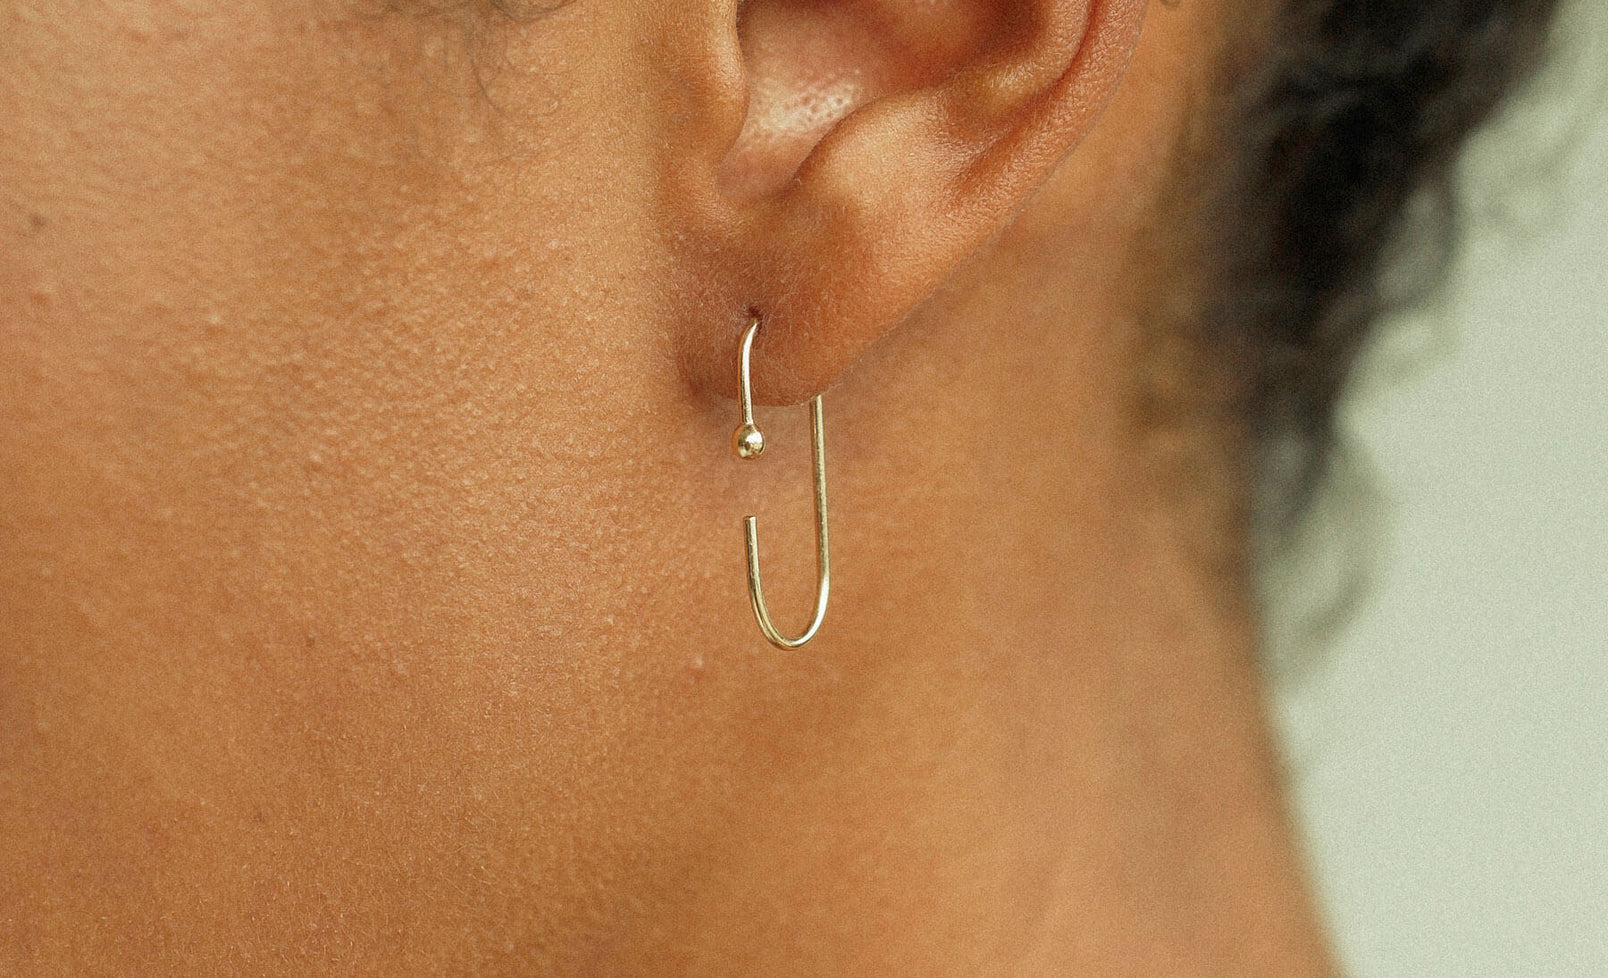 Pin I Earring